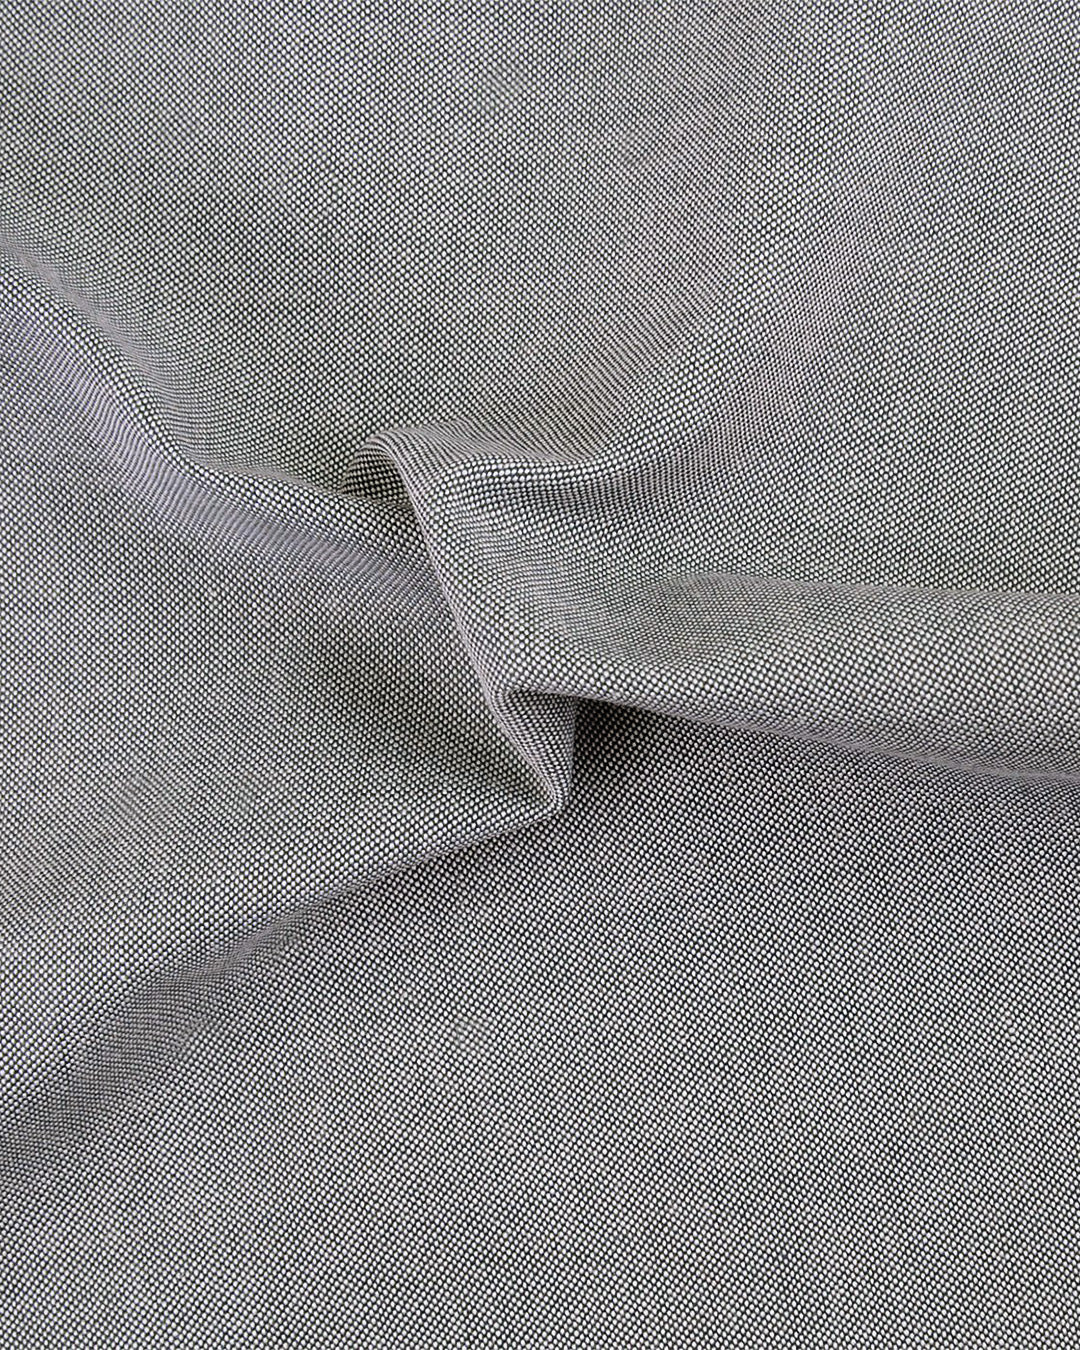 Grey Pinpoint Oxford Dress Shirt